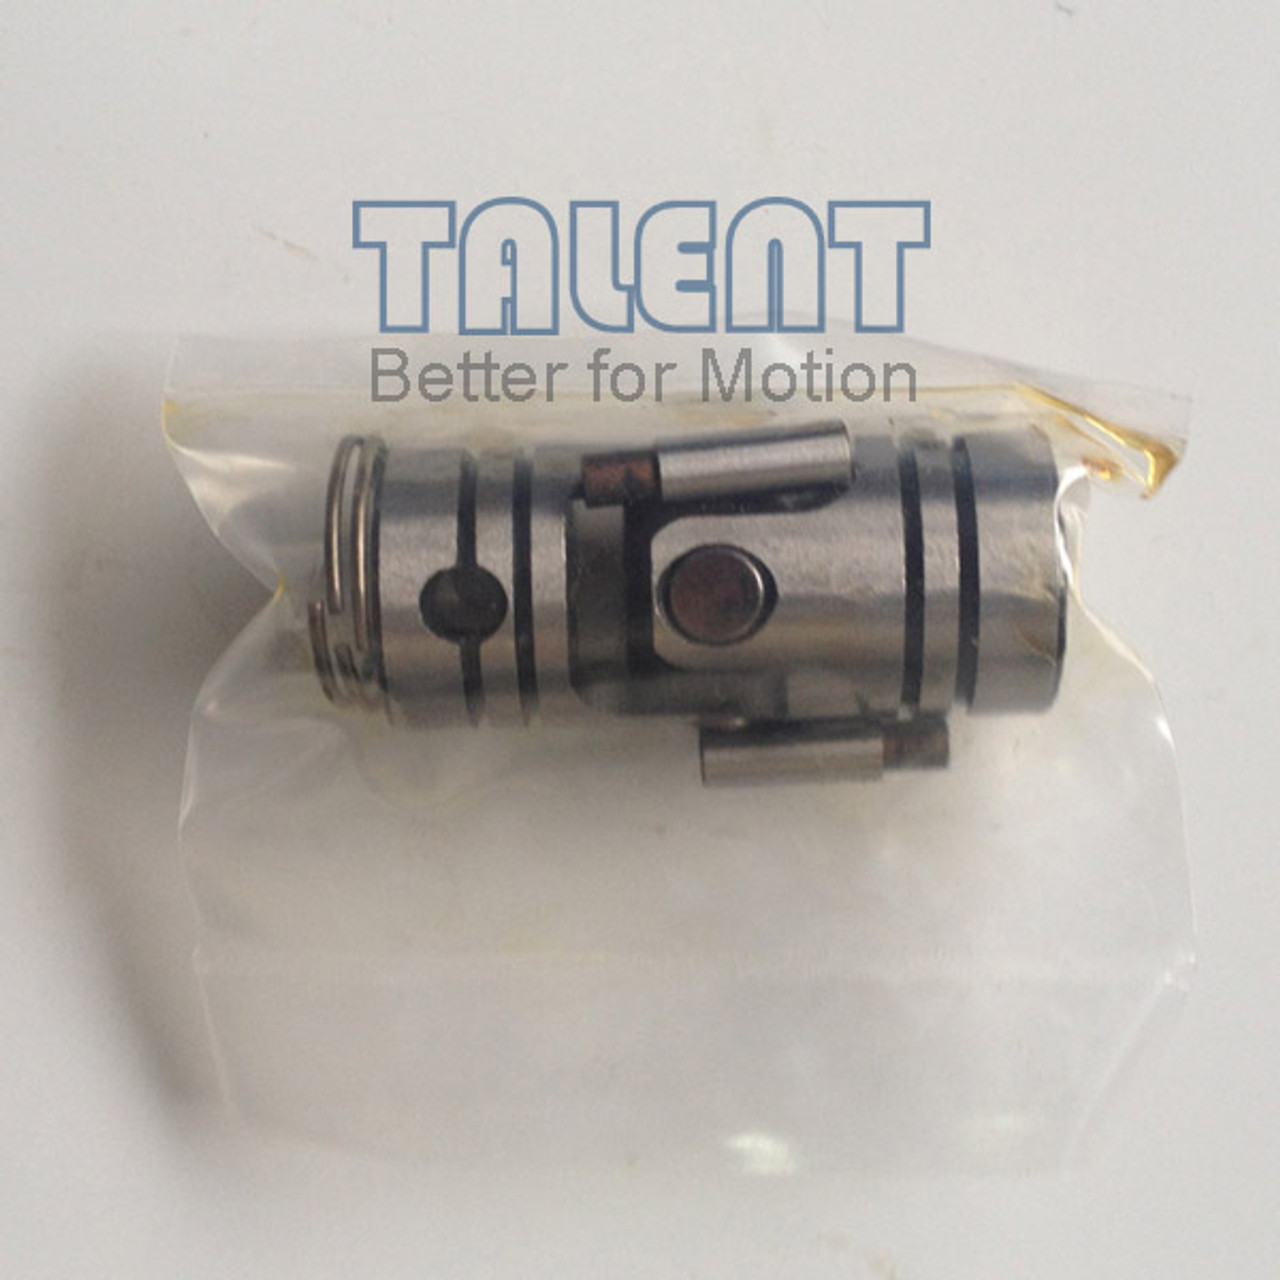 4x4, universal pin mini 02WS shaft attachment bore - Motion set Talent joint,